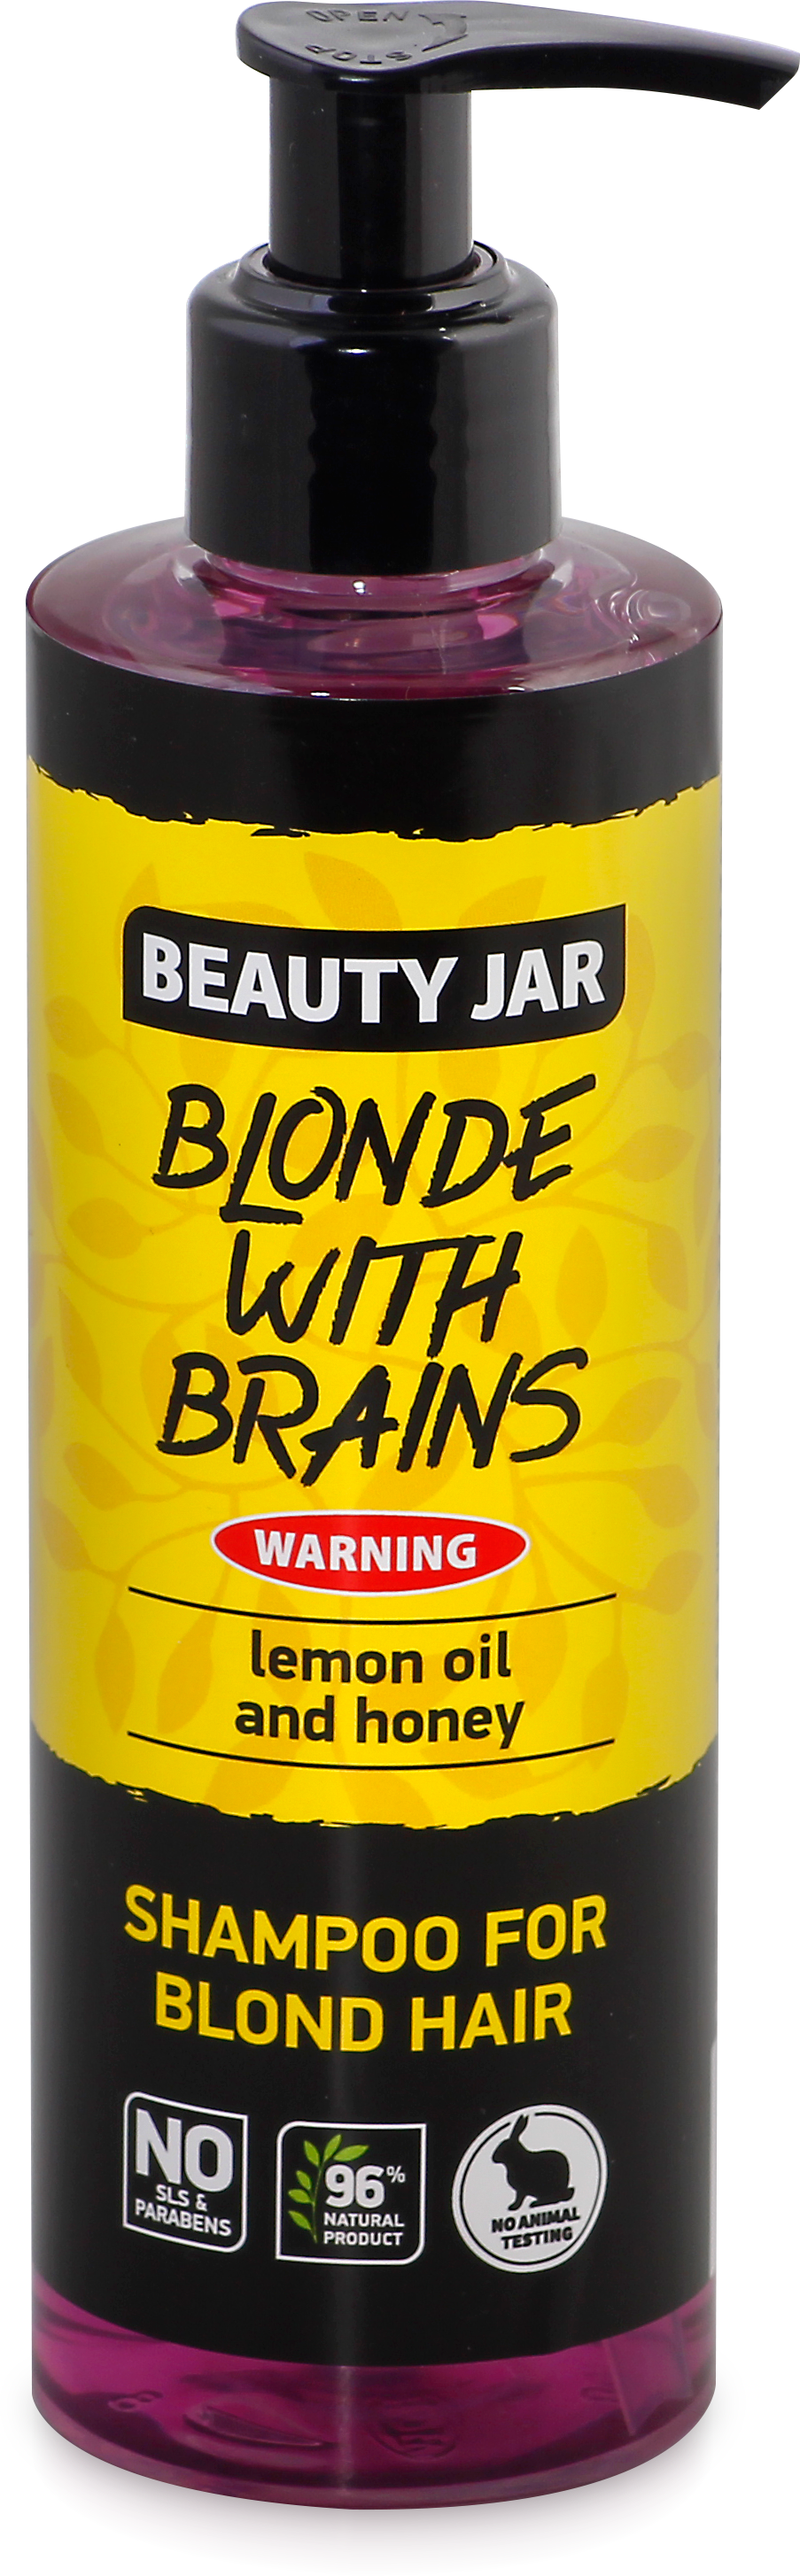 Шампунь Beauty Jar Blonde with brain, для блондинок, 250 мл - фото 1